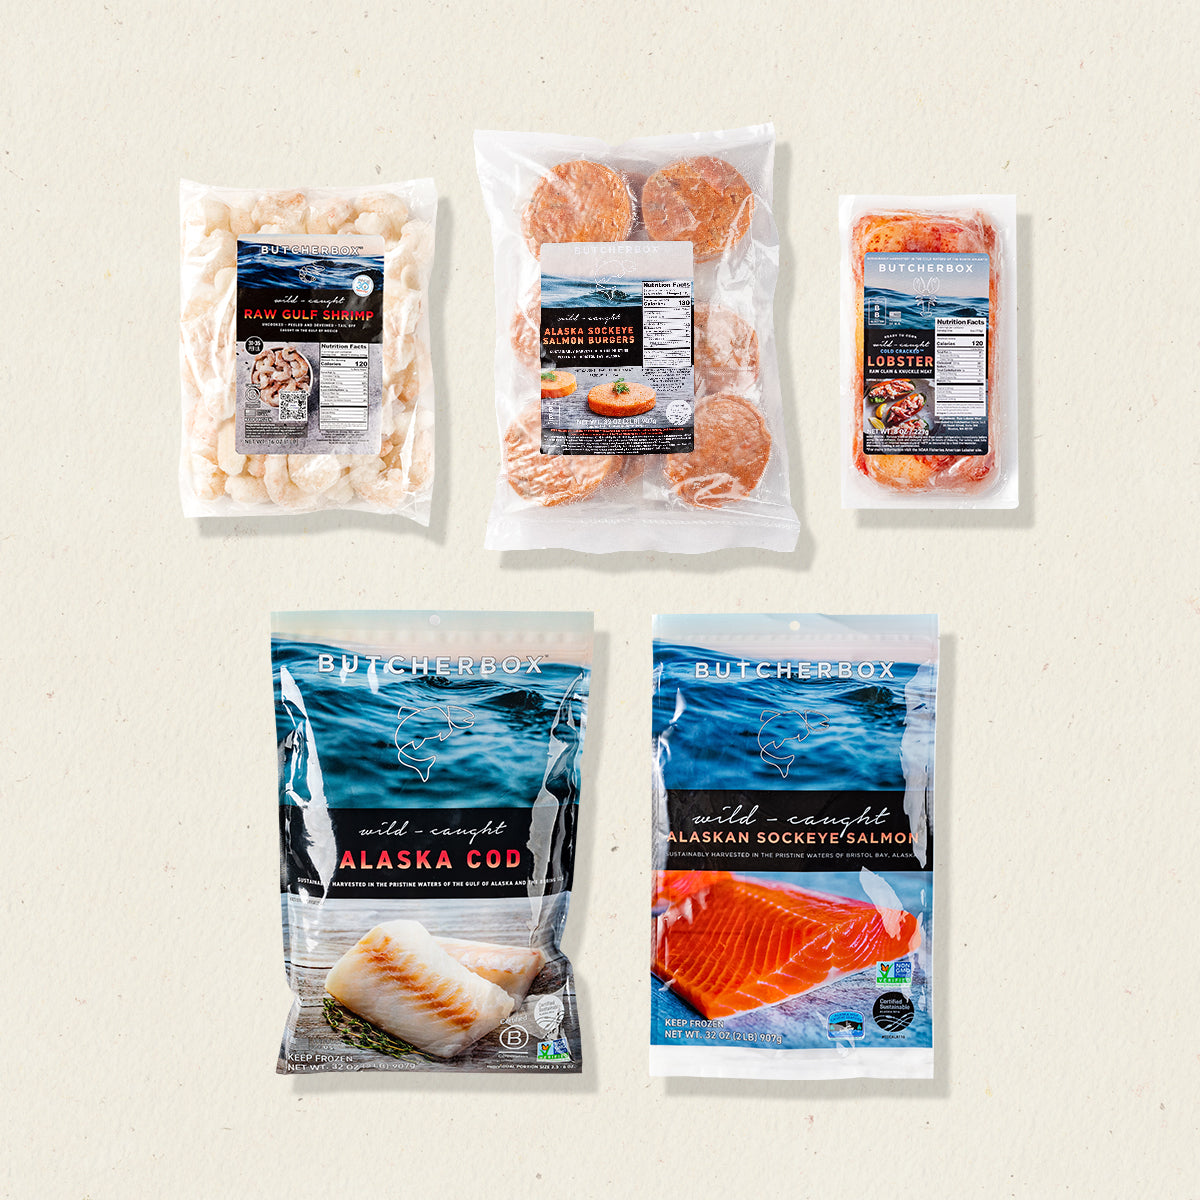 Admiral's Seafood Wild Caught Wild Alaskan Sockeye Salmon 6 Ct., 6 Oz. Each, Meat & Seafood, Food & Gifts